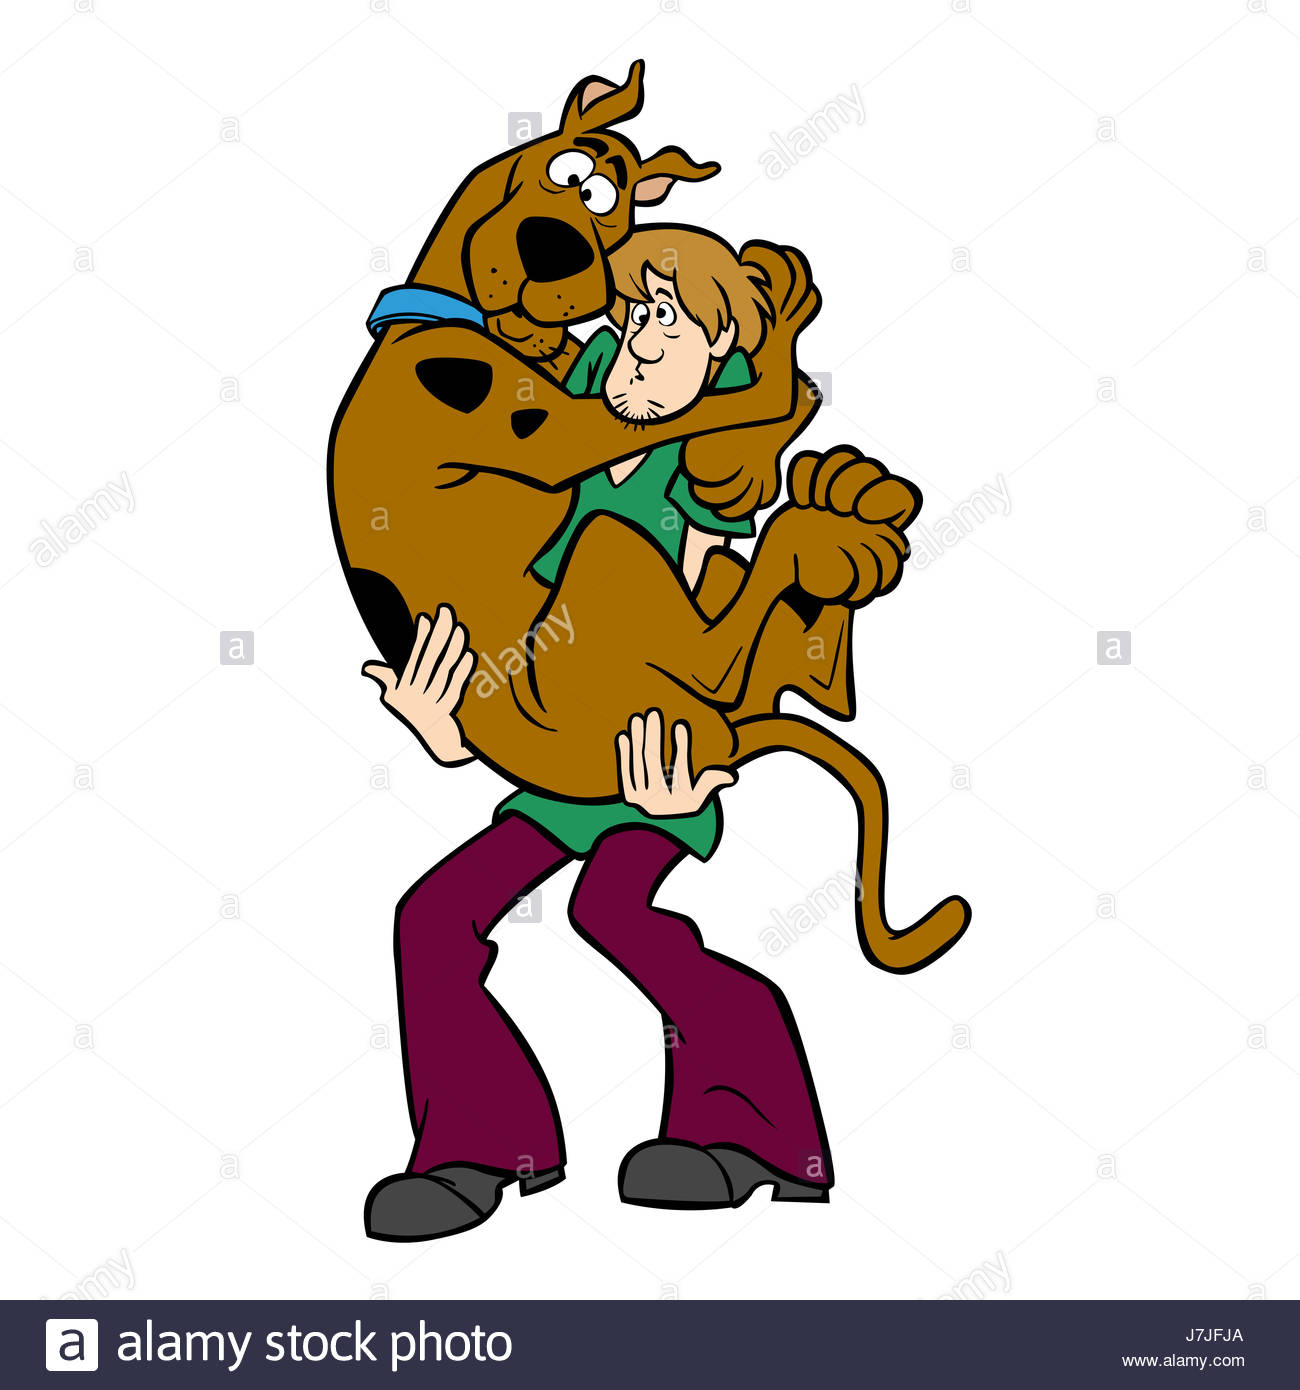 Scooby Doo Cartoon Stock Photos & Scooby Doo Cartoon Stock Images - Alamy